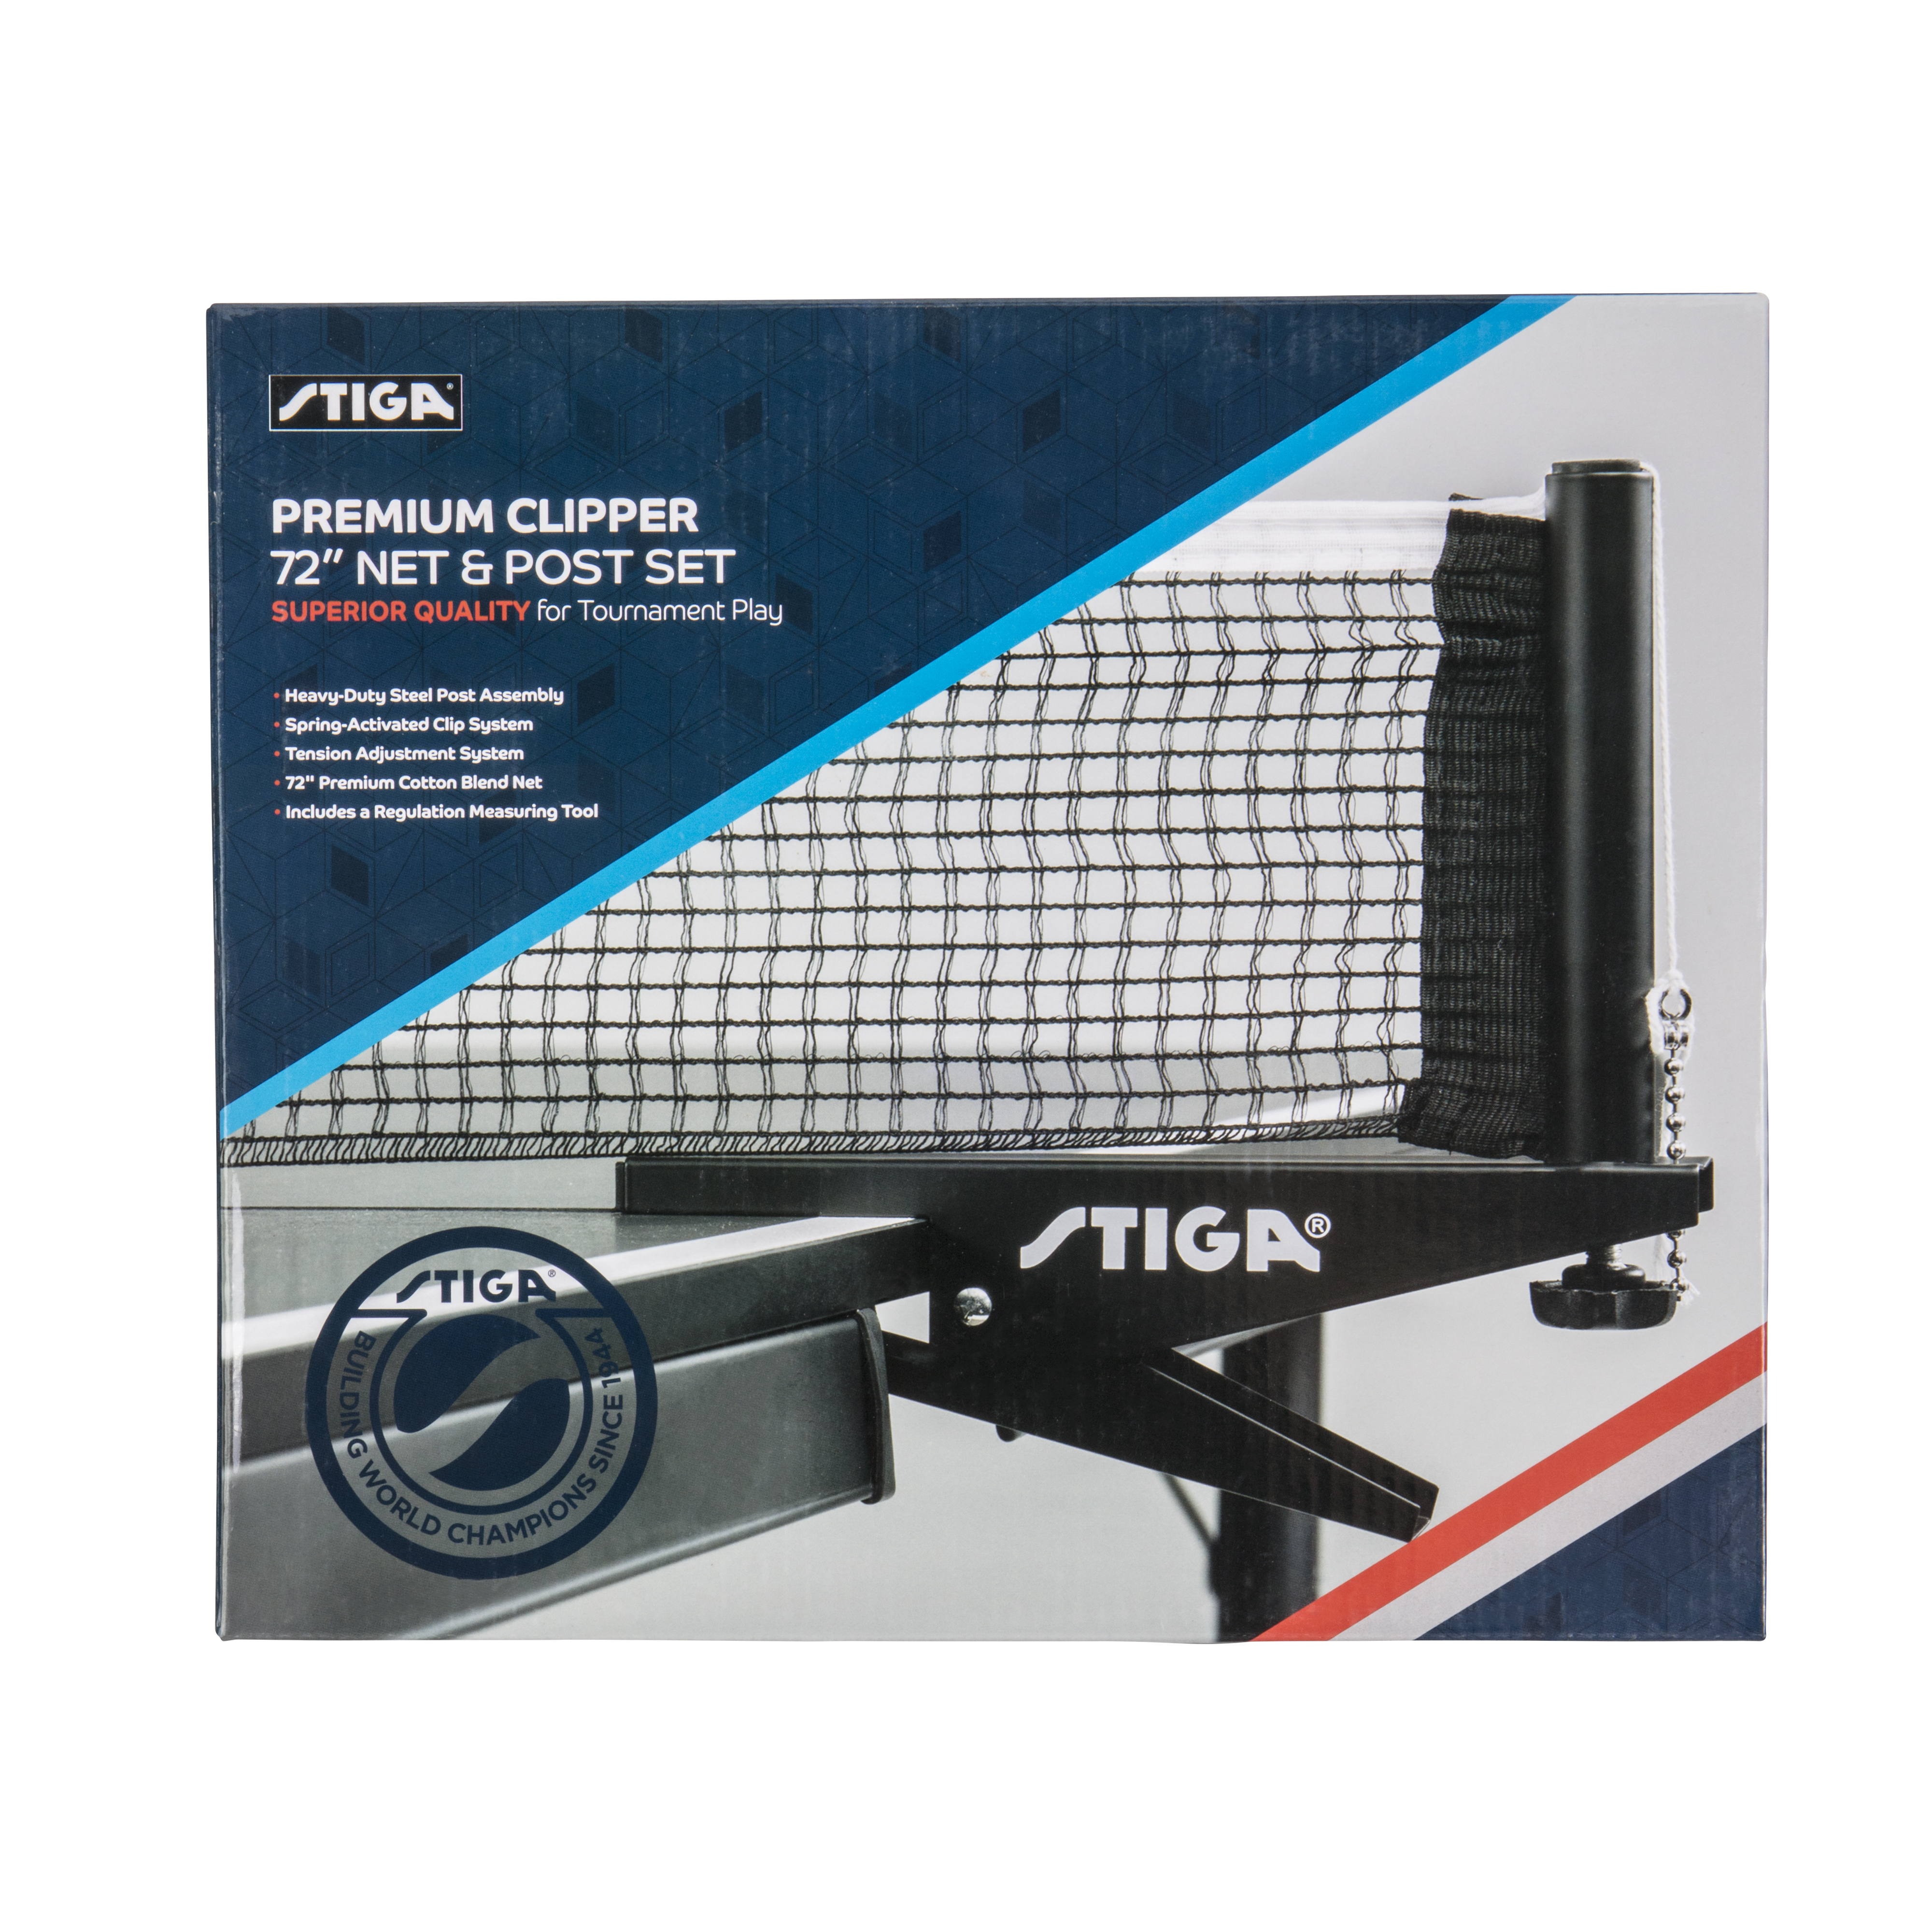 STIGA Premium Clipper/Net Post Table Tennis Set